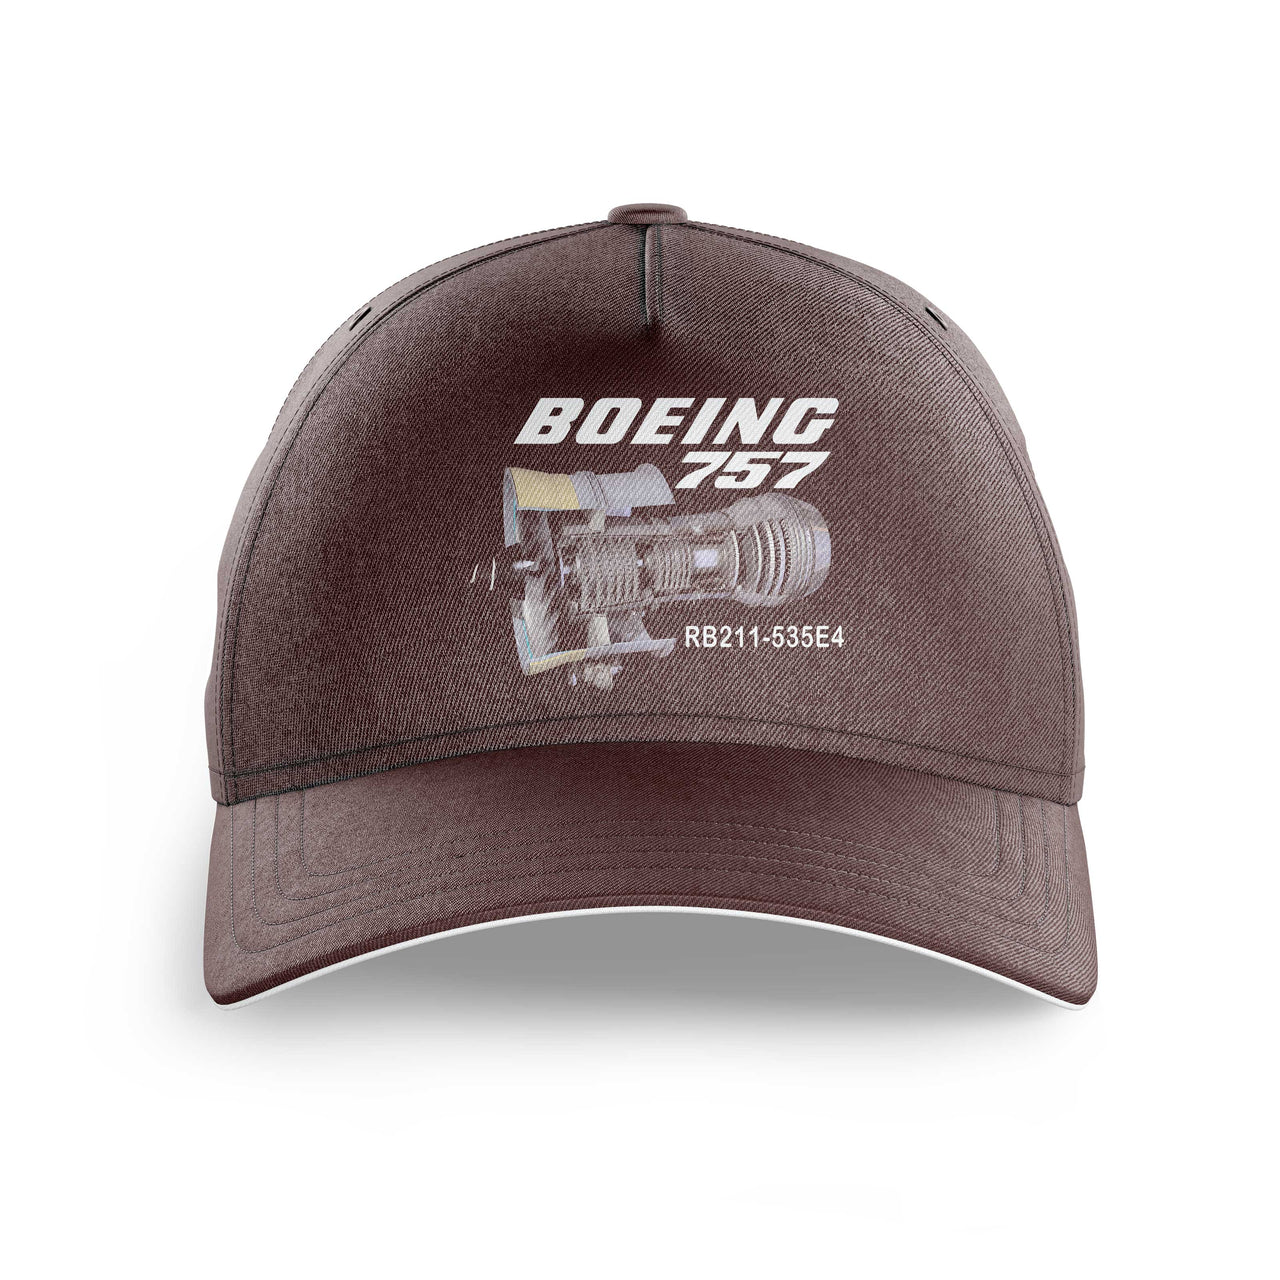 Boeing 757 & Rolls Royce Engine (RB211) Printed Hats